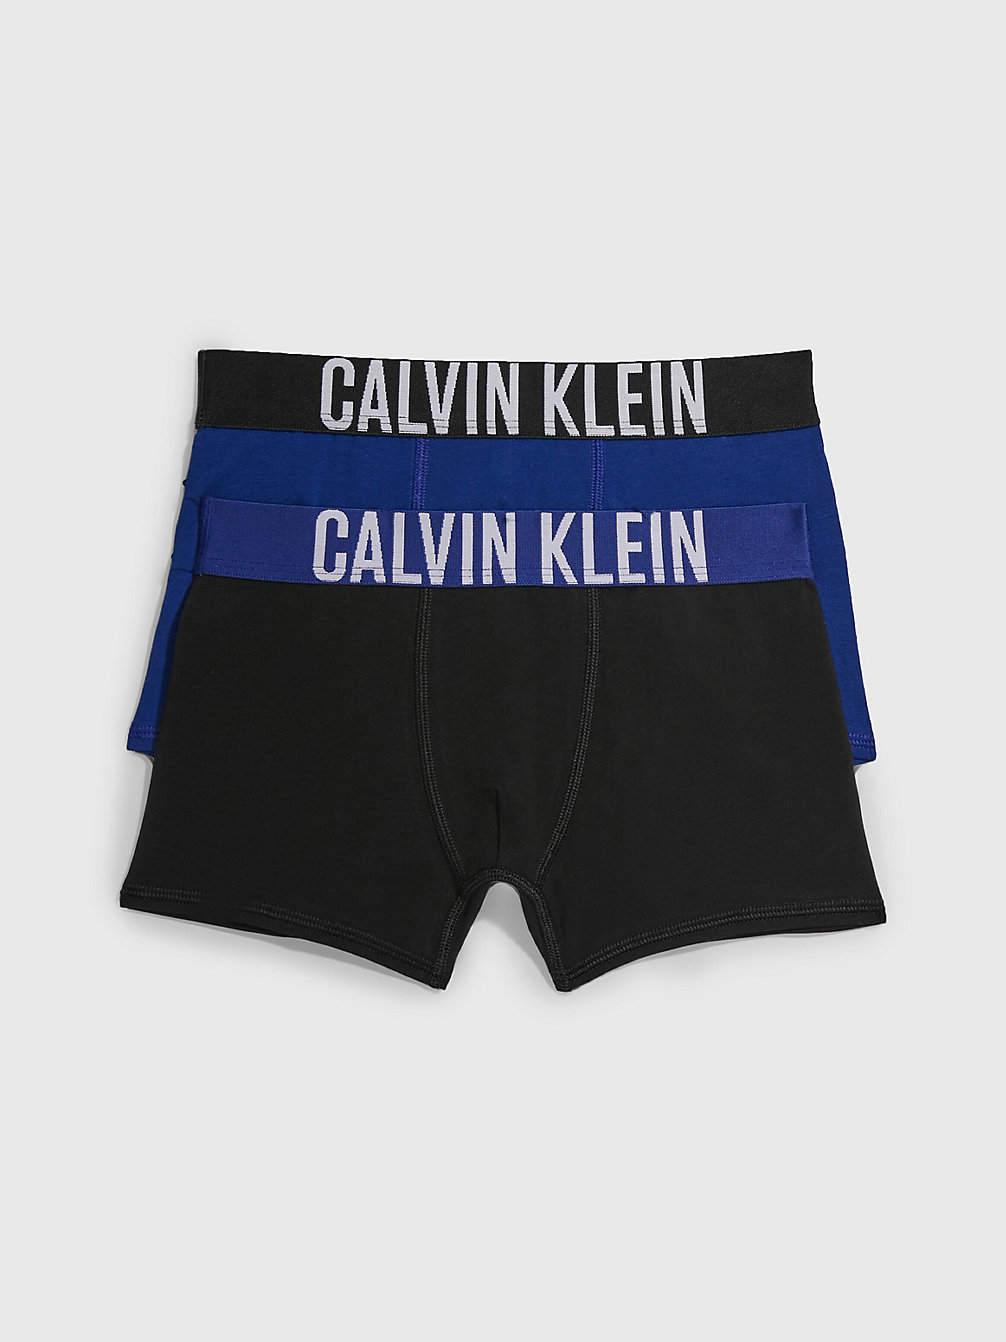 BOLDBLUE/PVHBLACK Lot De 2 Boxers Pour Garçon - Intense Power undefined garcons Calvin Klein